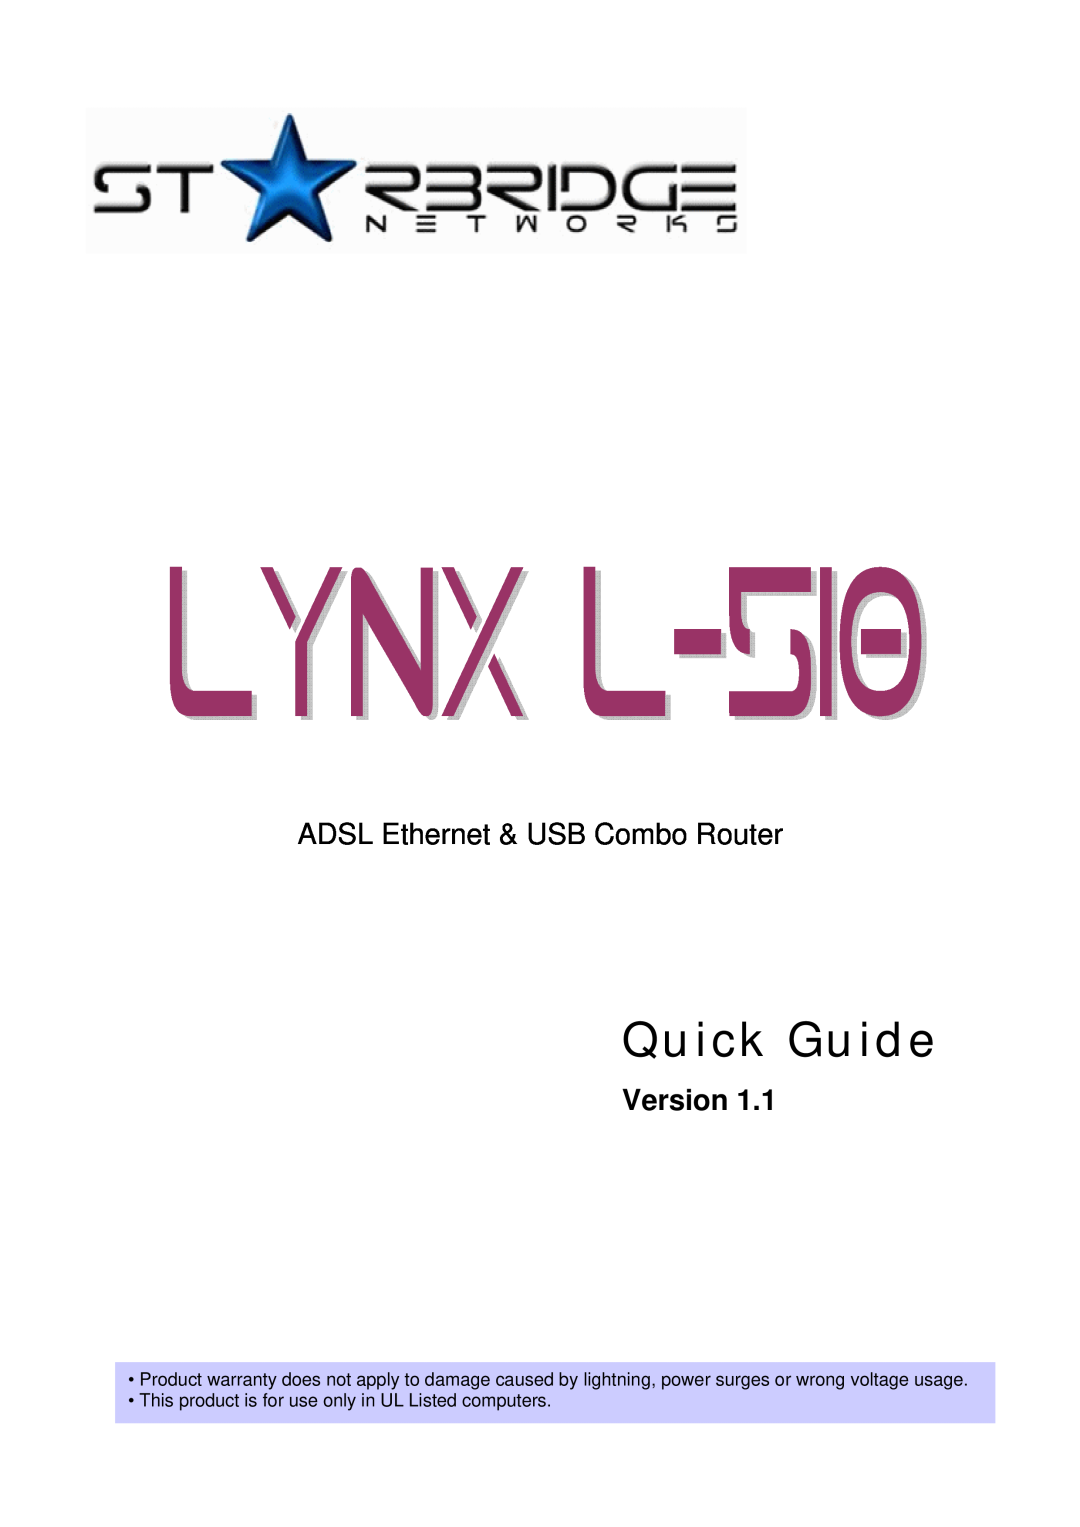 3Com Lynx L-510 warranty Version, Quick Guide, ADSL Ethernet & USB Combo Router 